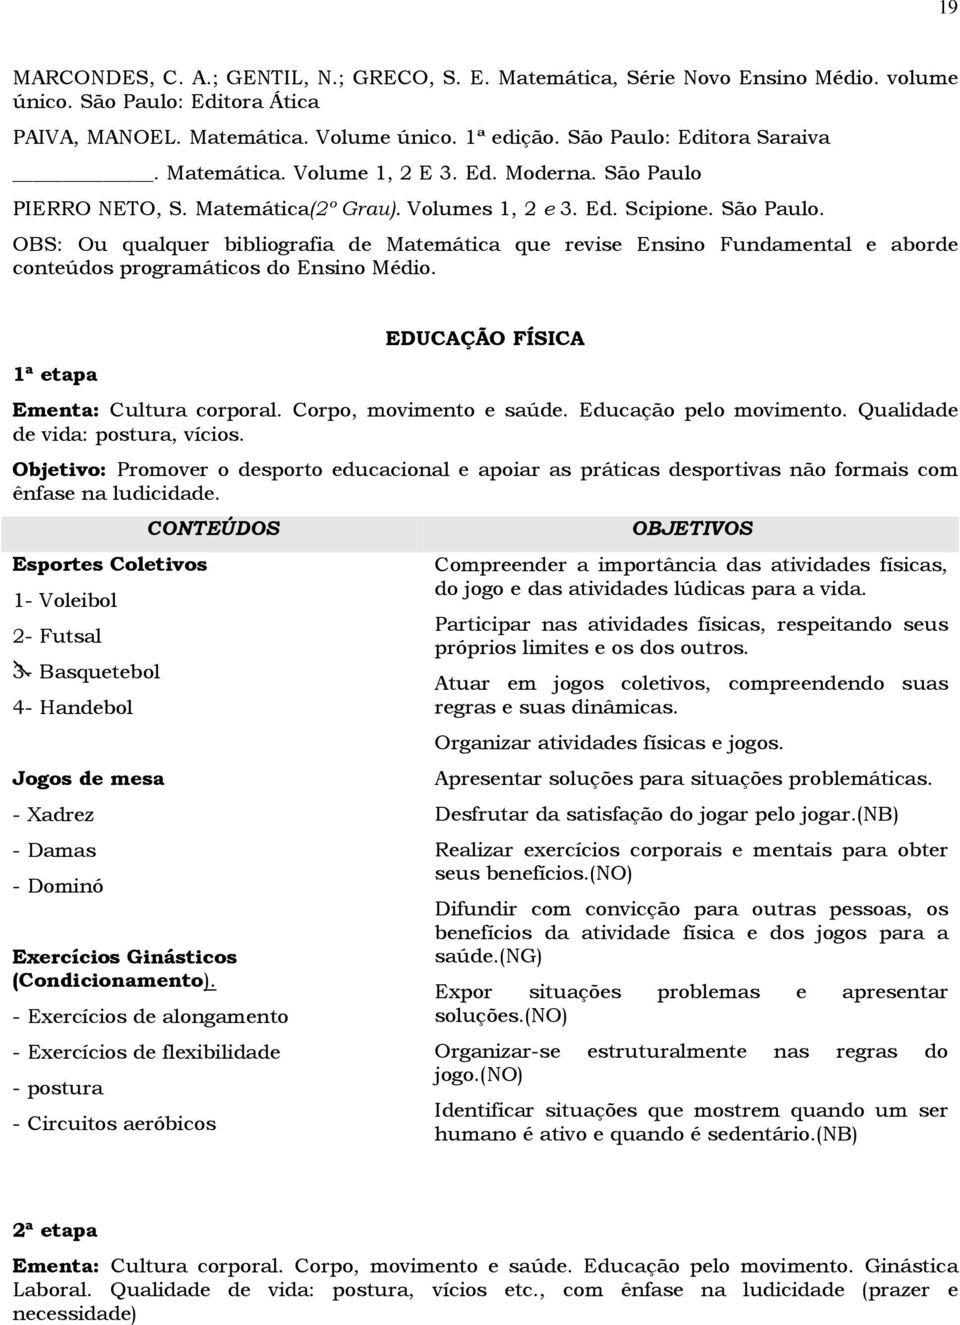 PIERRO NETO, S. Matemática(2º Grau). Volumes 1, 2 e 3. Ed. Scipione. São Paulo.